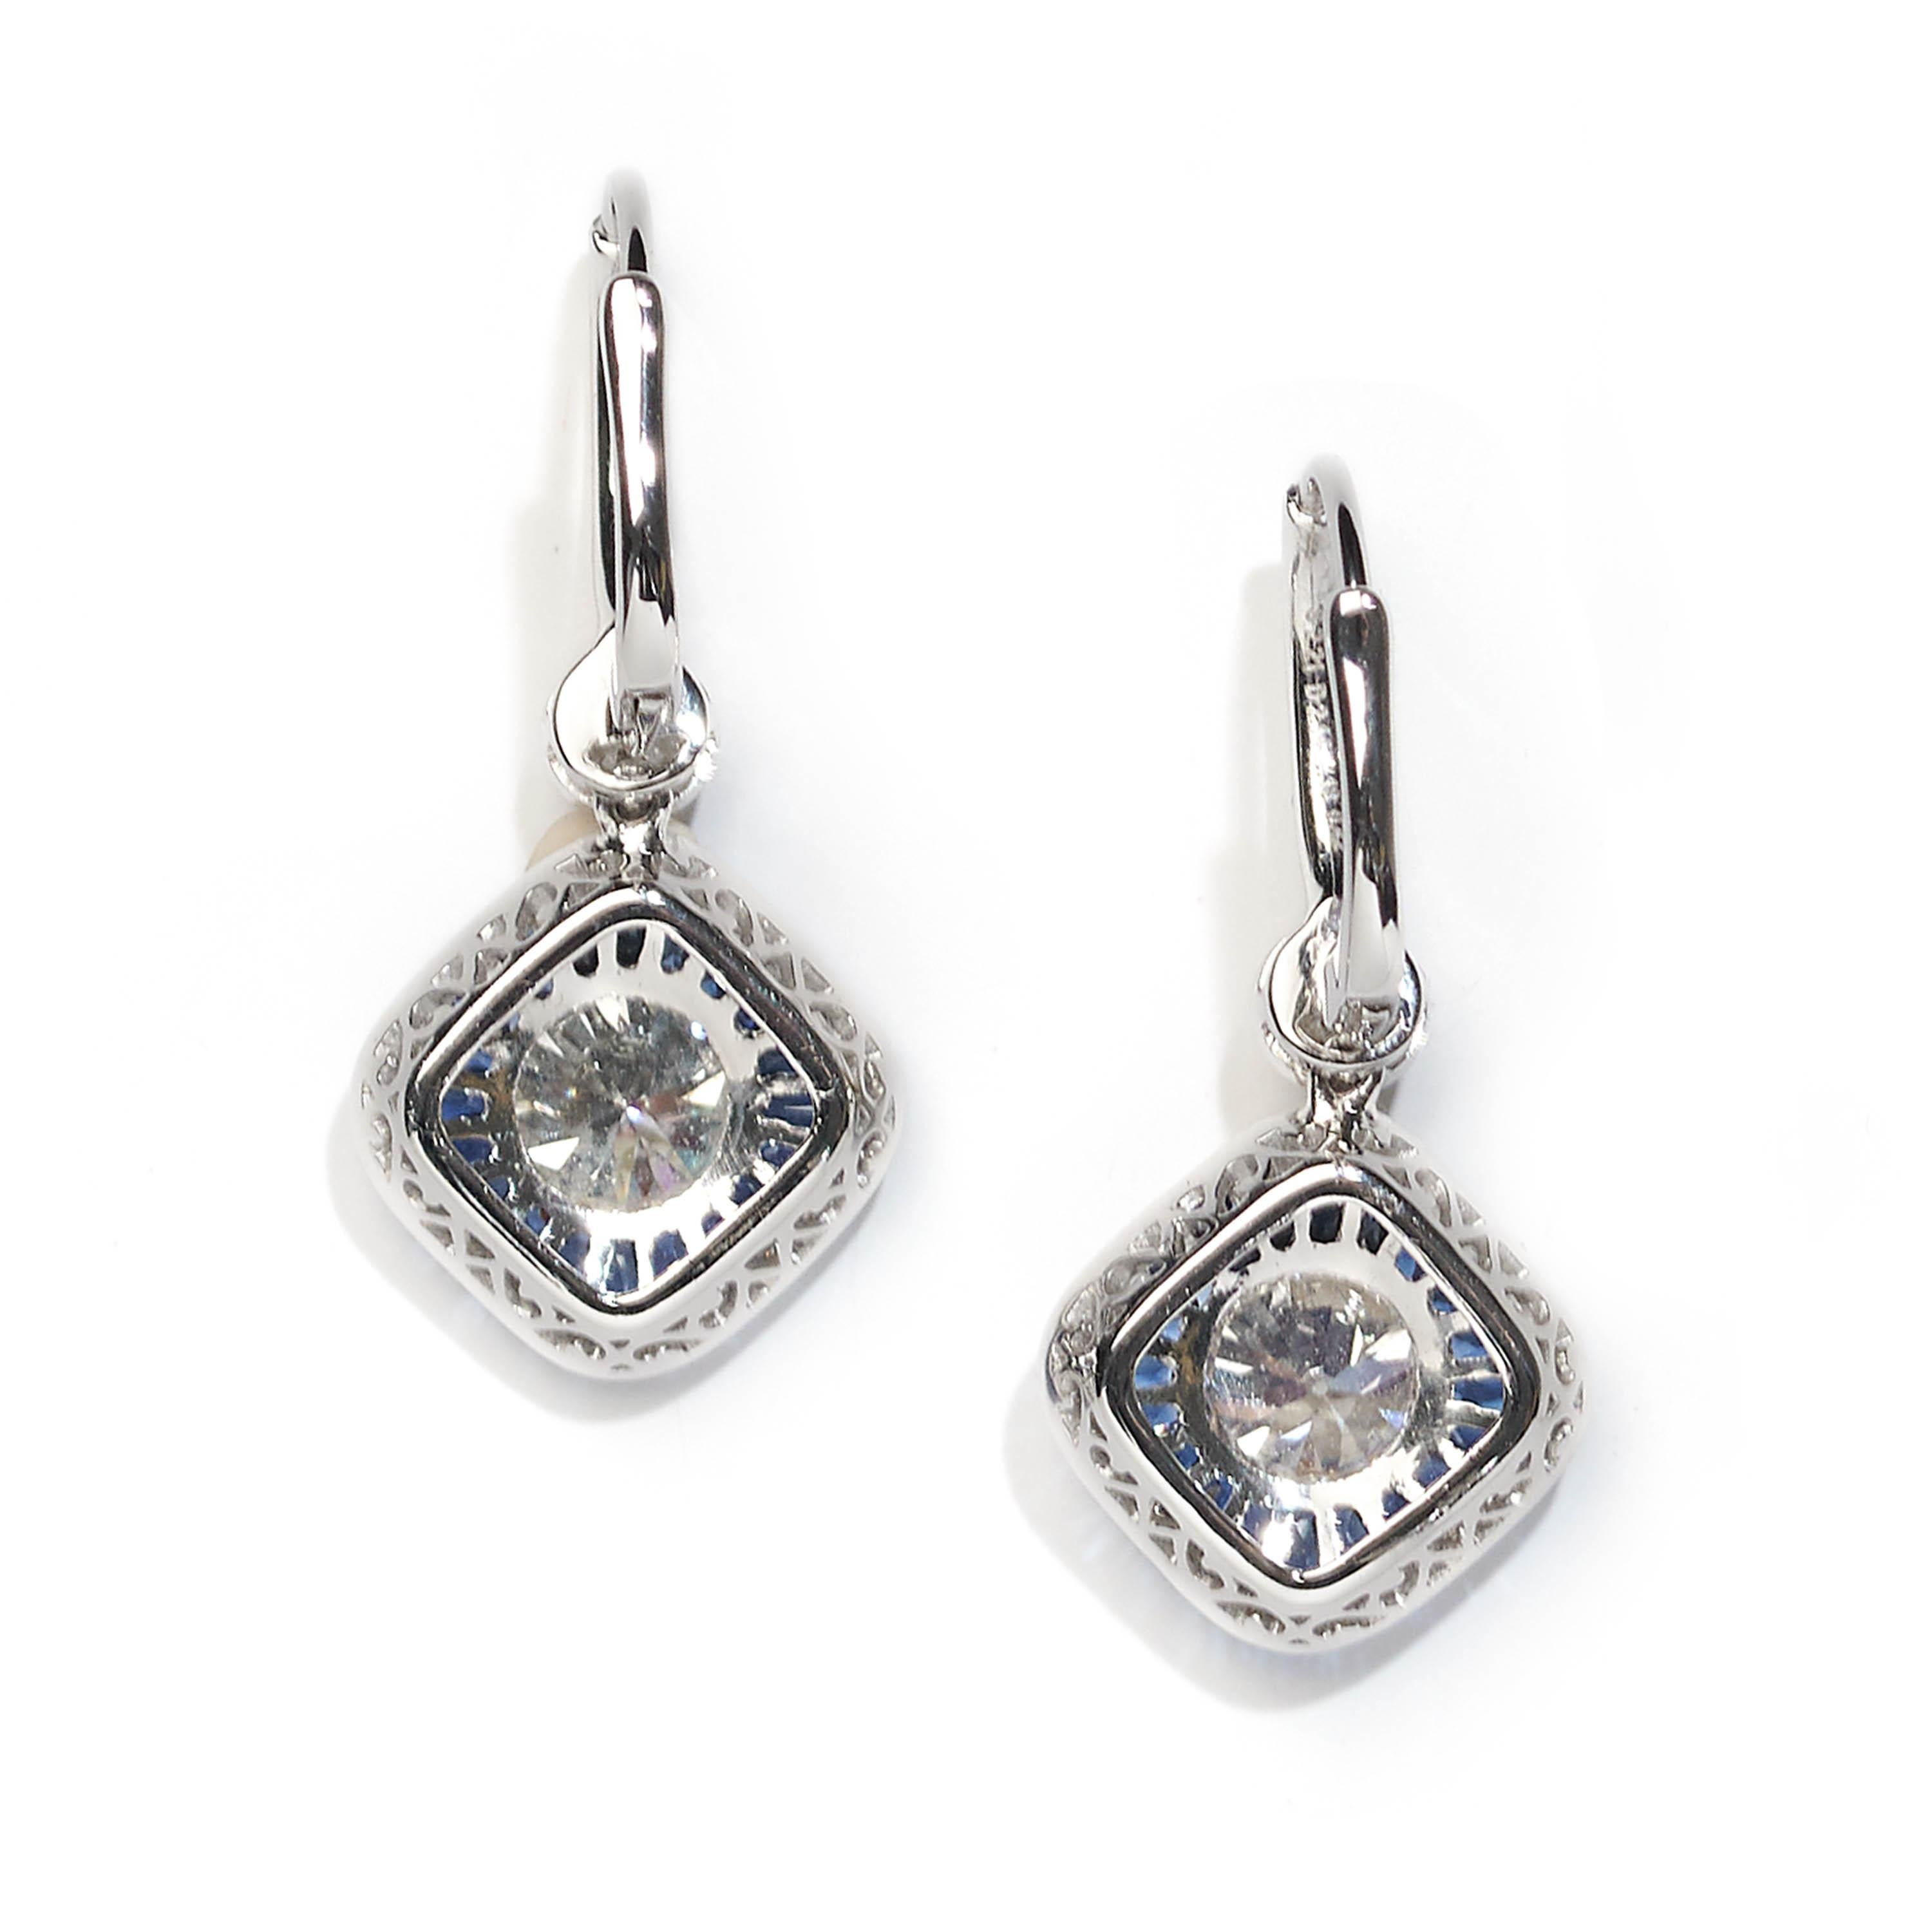 Brilliant Cut Sapphire, Diamond and Platinum Drop Earrings, 2.70 Carat